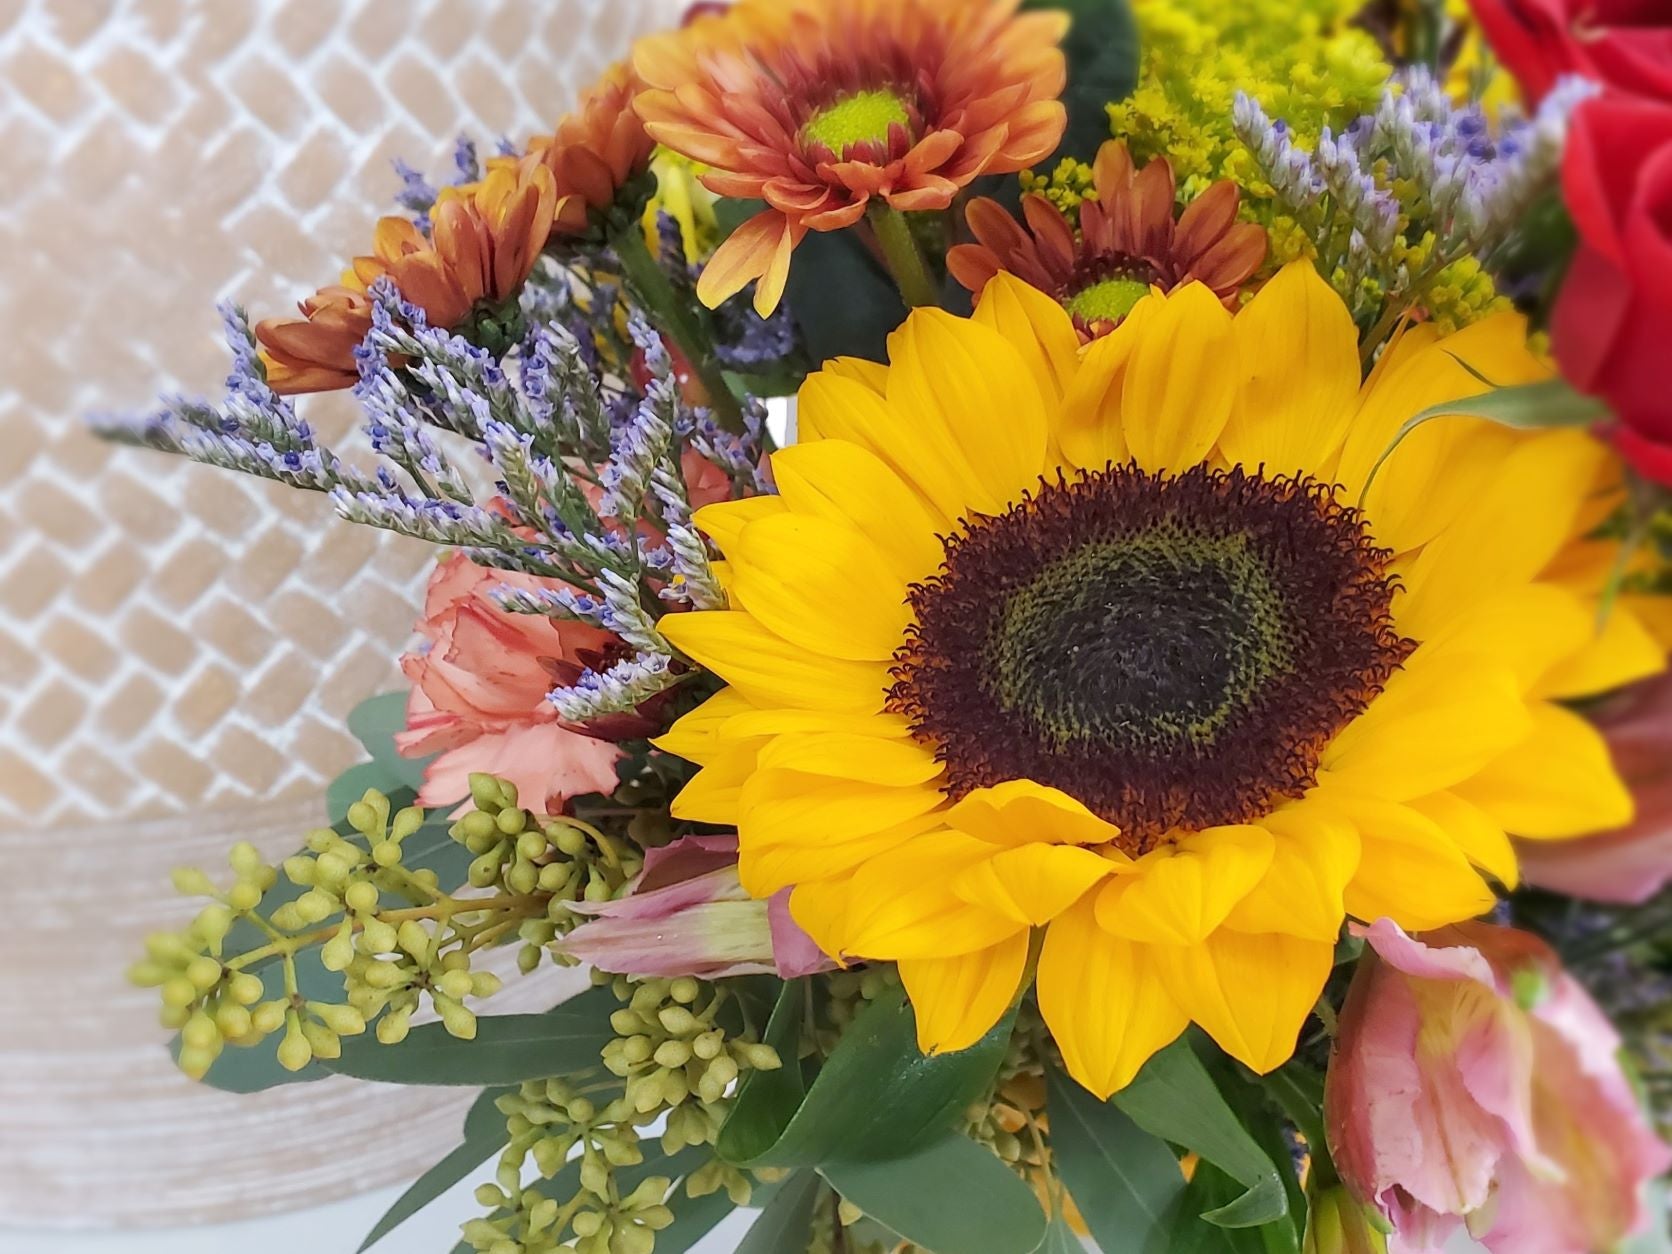 Custom Sunflower Bouquet wrap